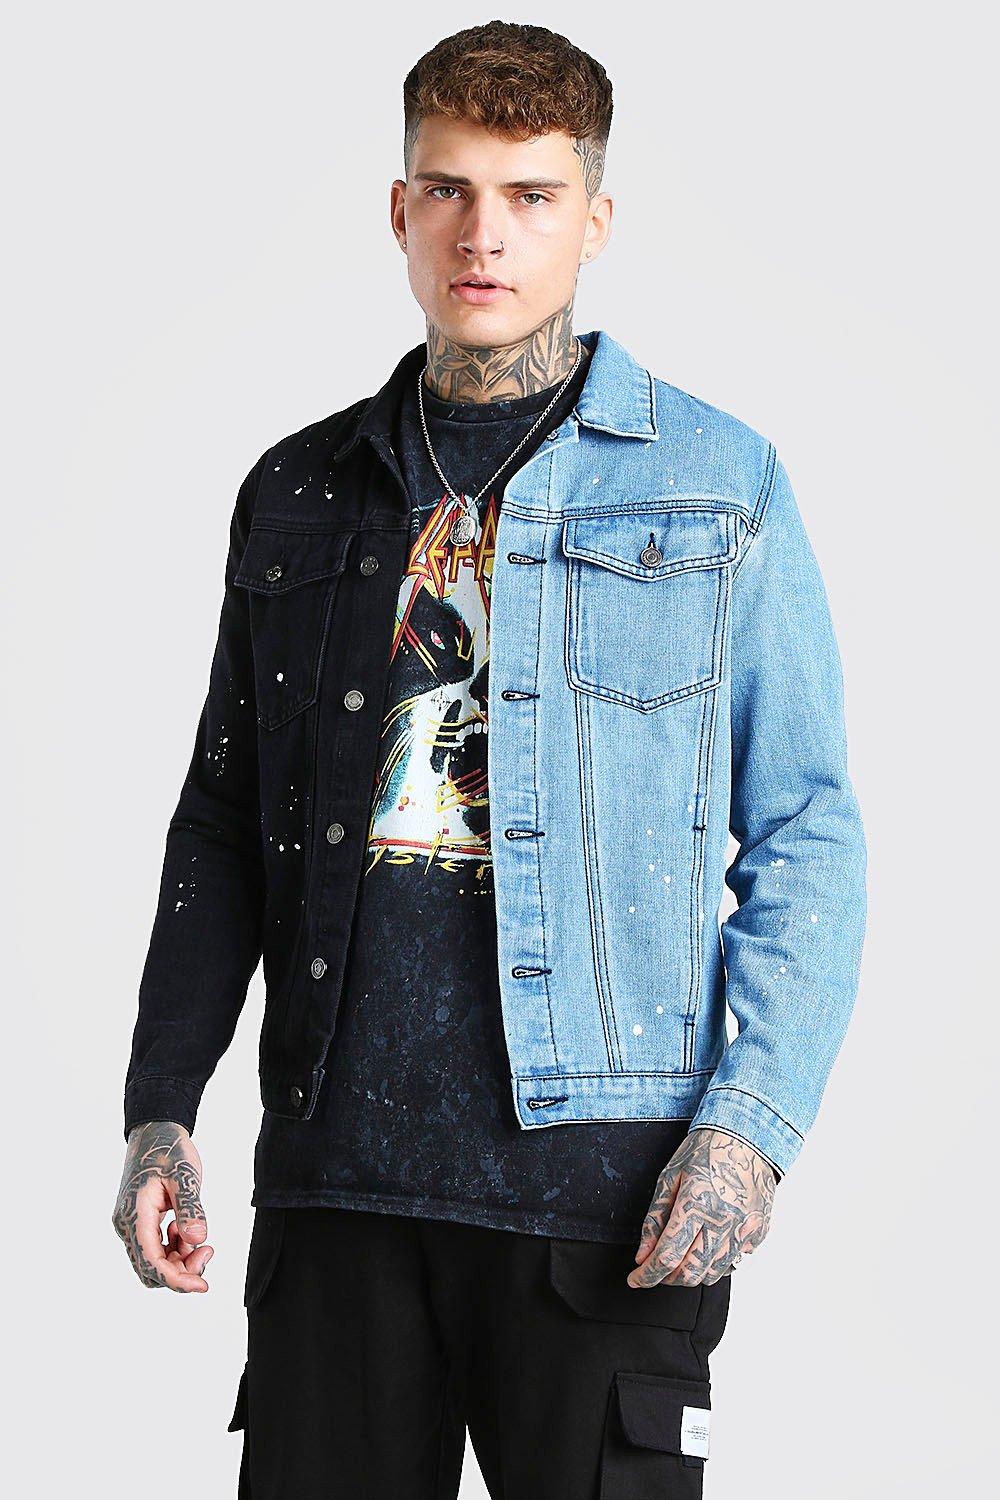 half black and half blue jean jacket